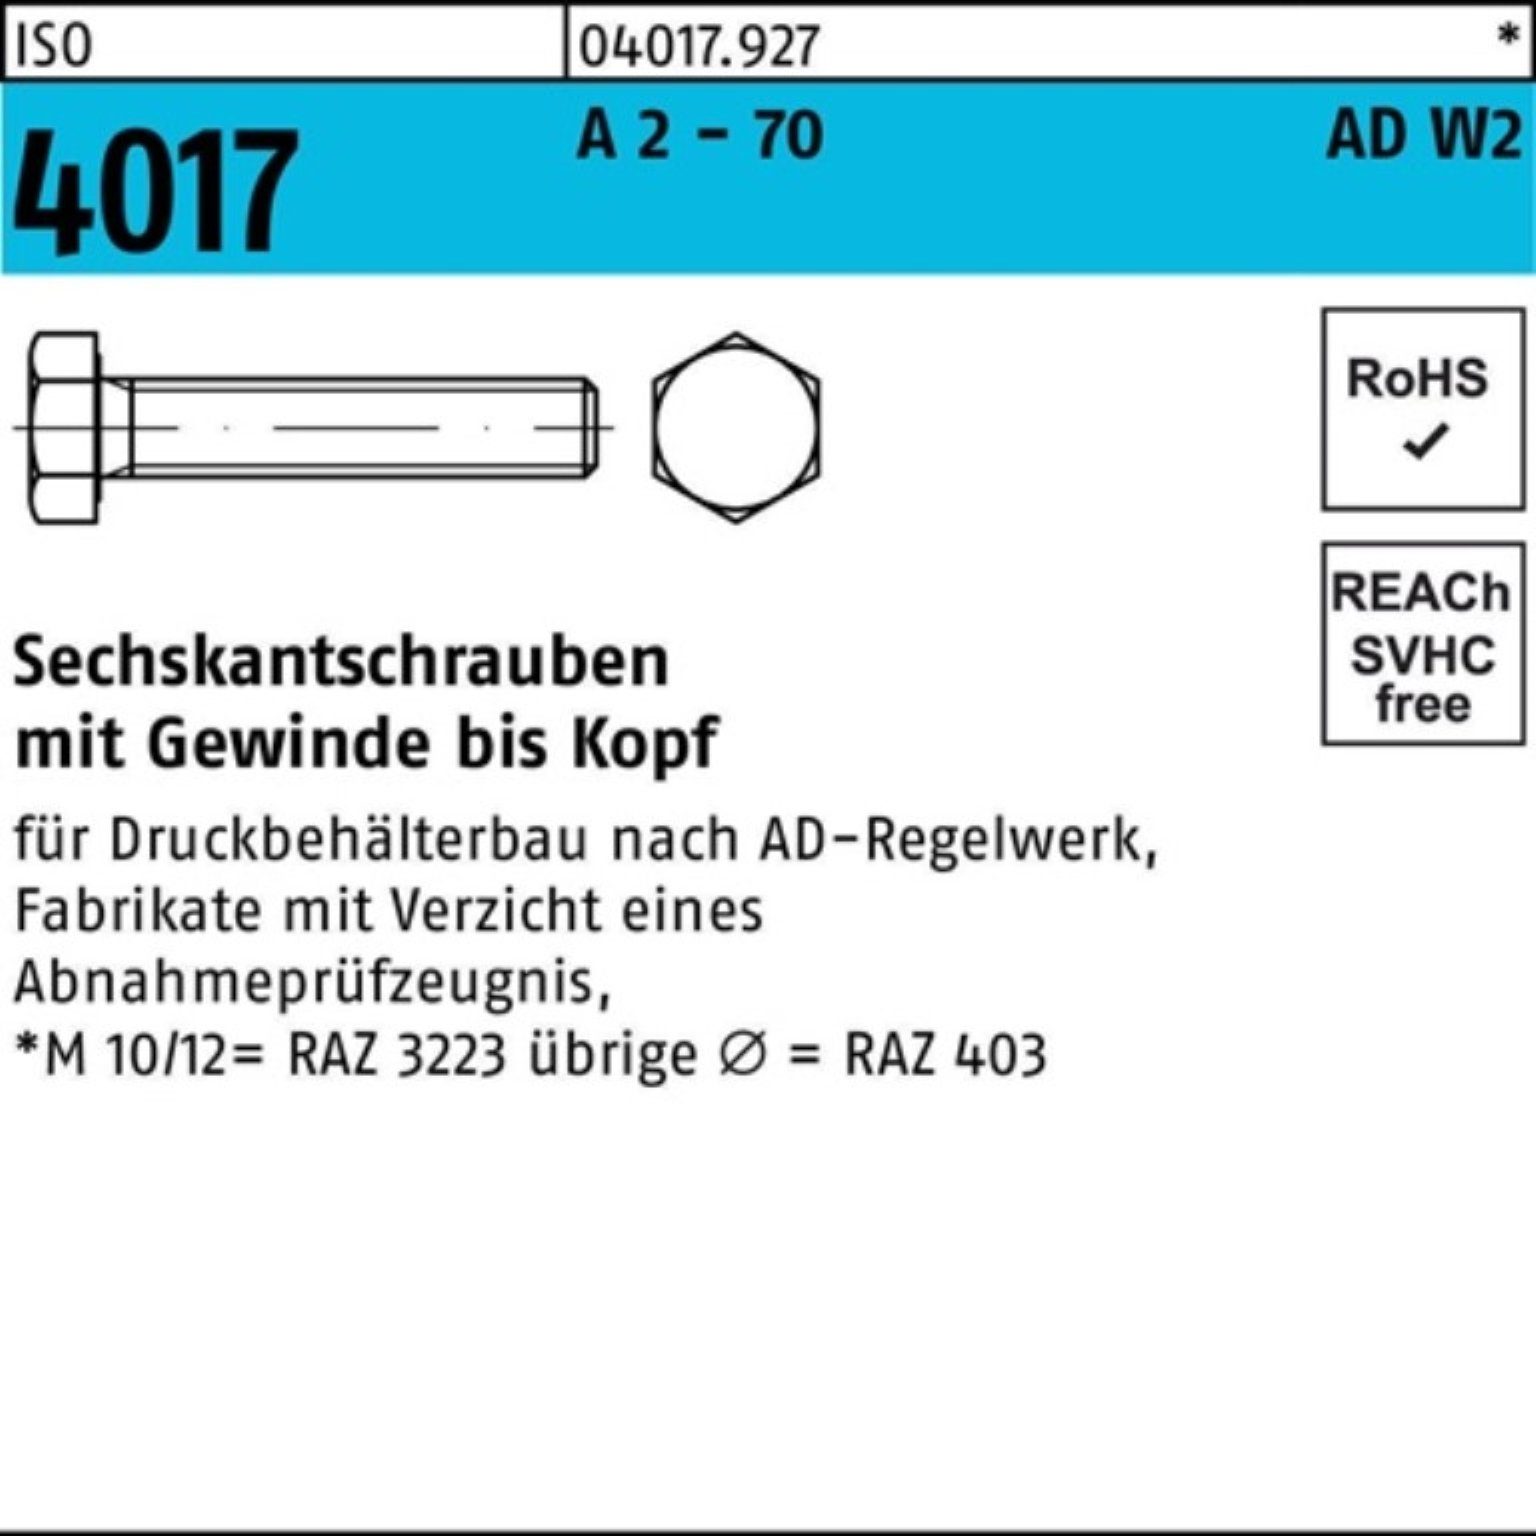 Bufab Sechskantschraube 100er Pack Sechskantschraube ISO 4017 VG M10x 20 A 2 - 70 AD-W2 100 St